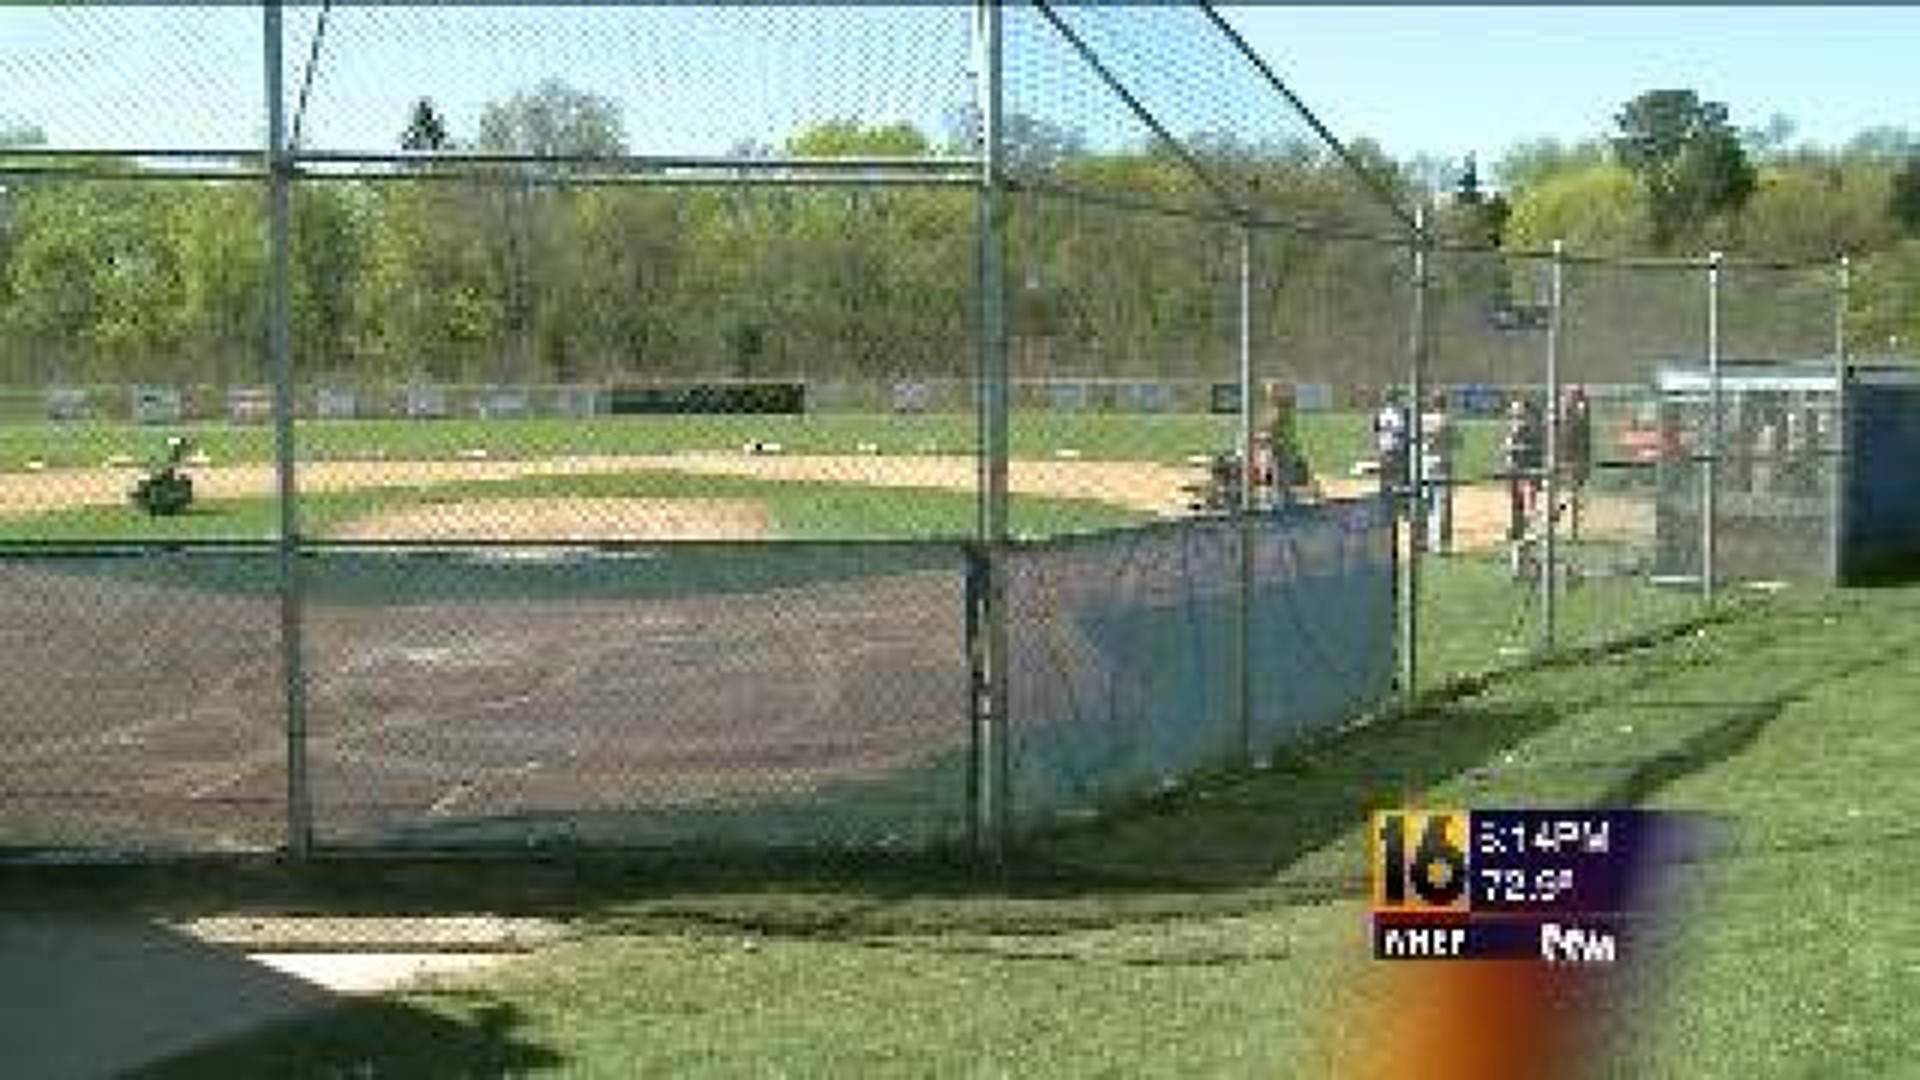 Railriders Give Little Leaguers a Ballpark Overhaul